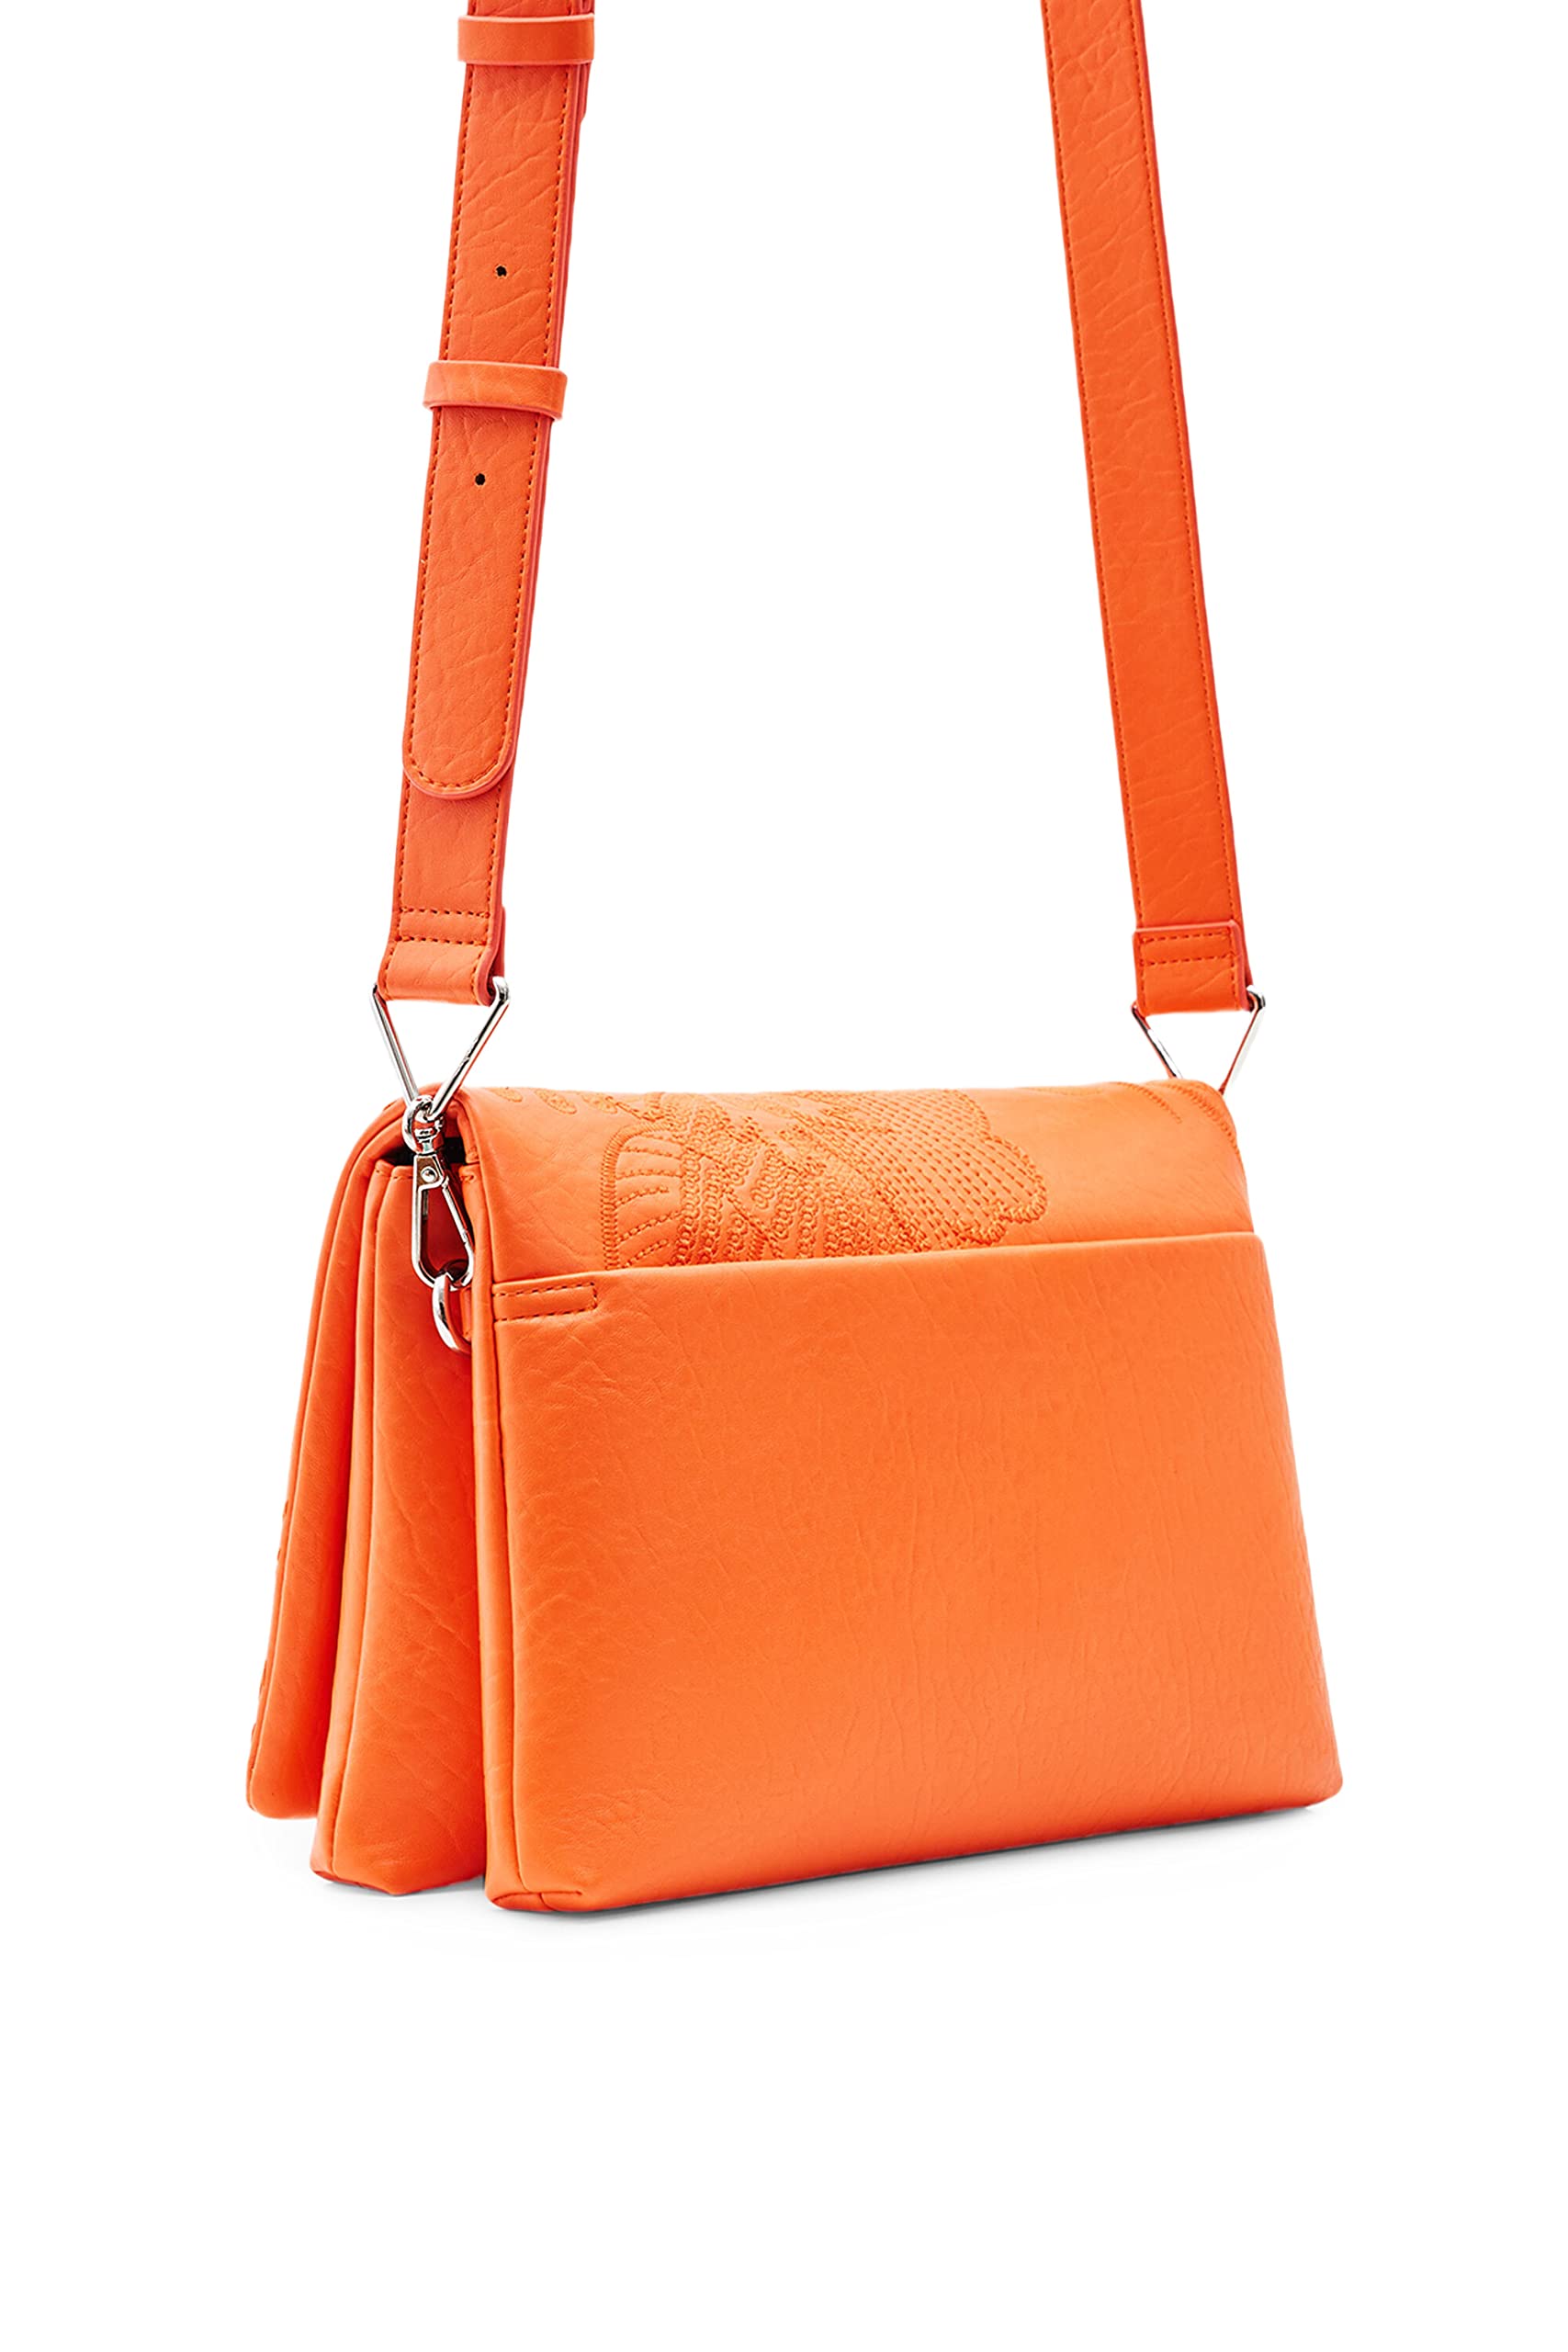 Desigual Accessories PU Across Body Bag, Orange